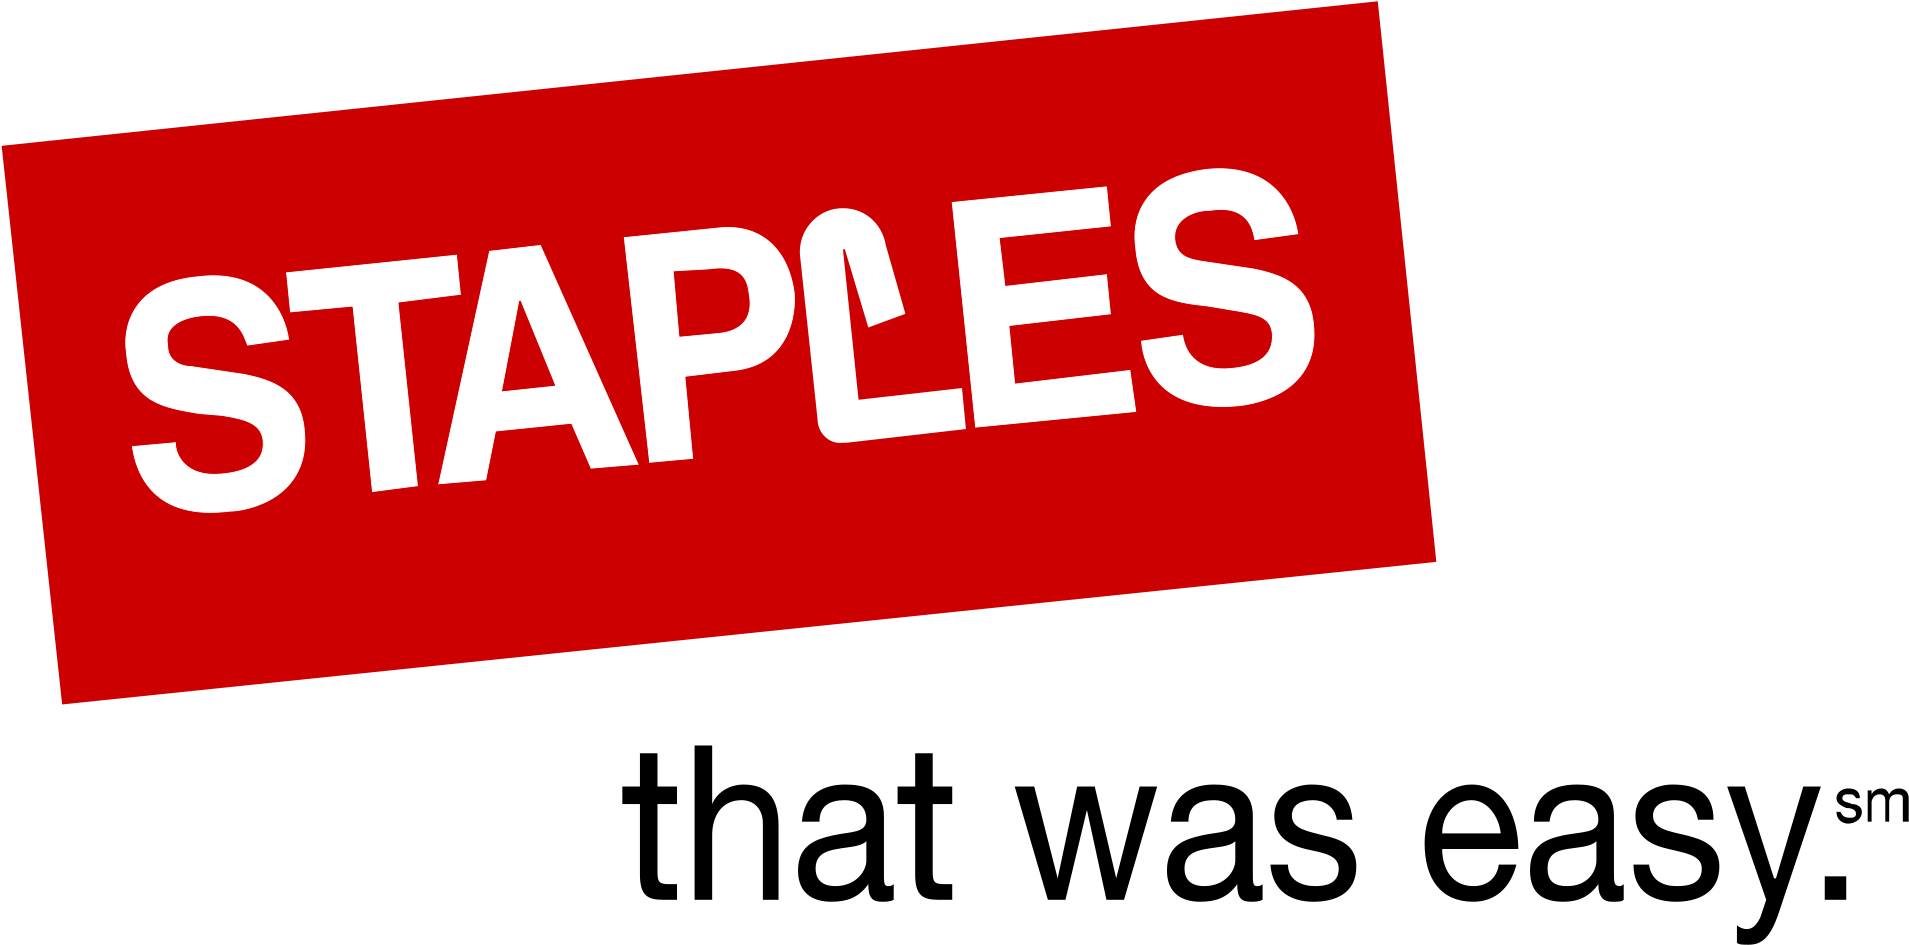 Staples Logos - Staples Coupons (2088x1080)